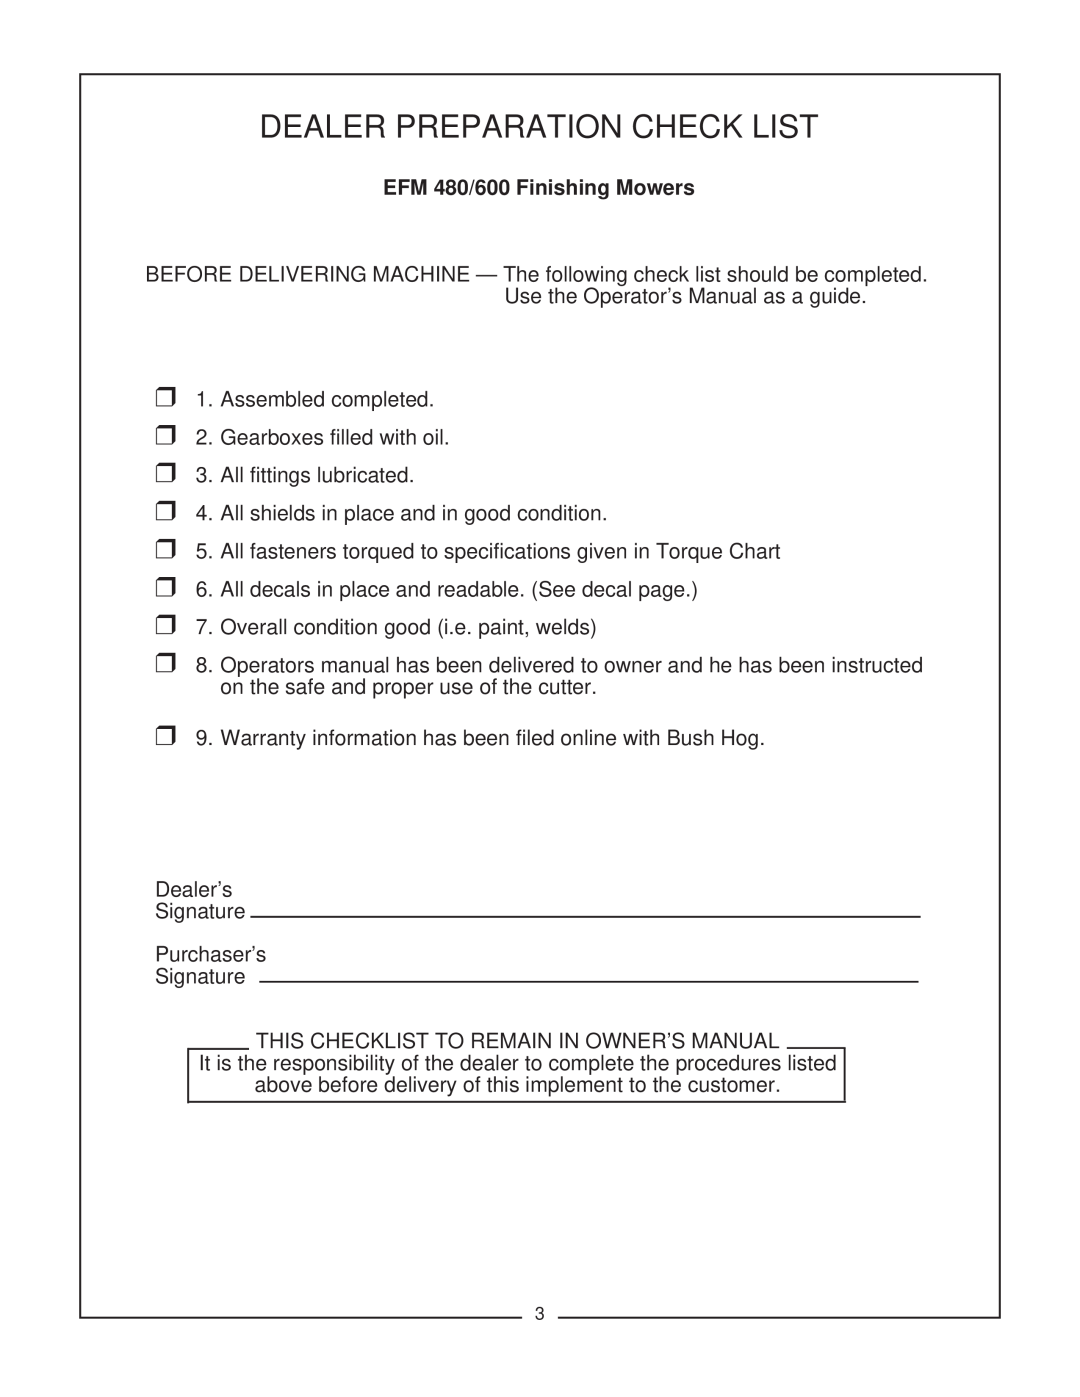 Bush Hog manual Dealer Preparation Check List, EFM 480/600 Finishing Mowers 